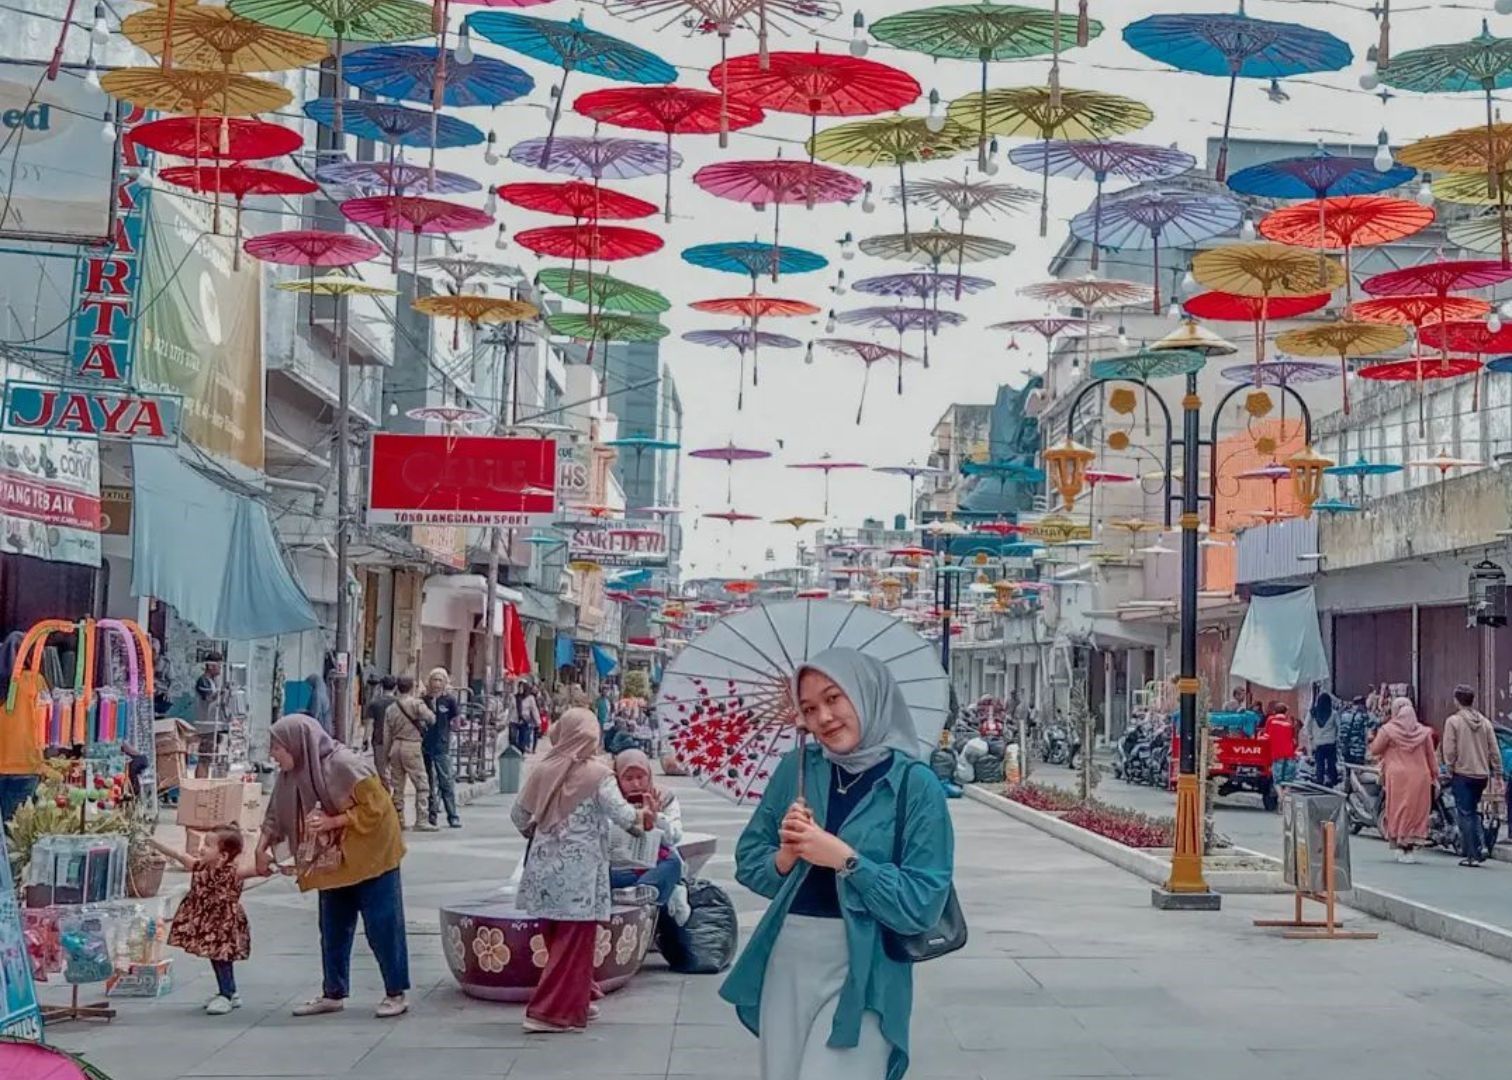 Berpose dengan payung geulis di bawah hiasan payung-payung geulis./ Instagram/ yurahmawati02